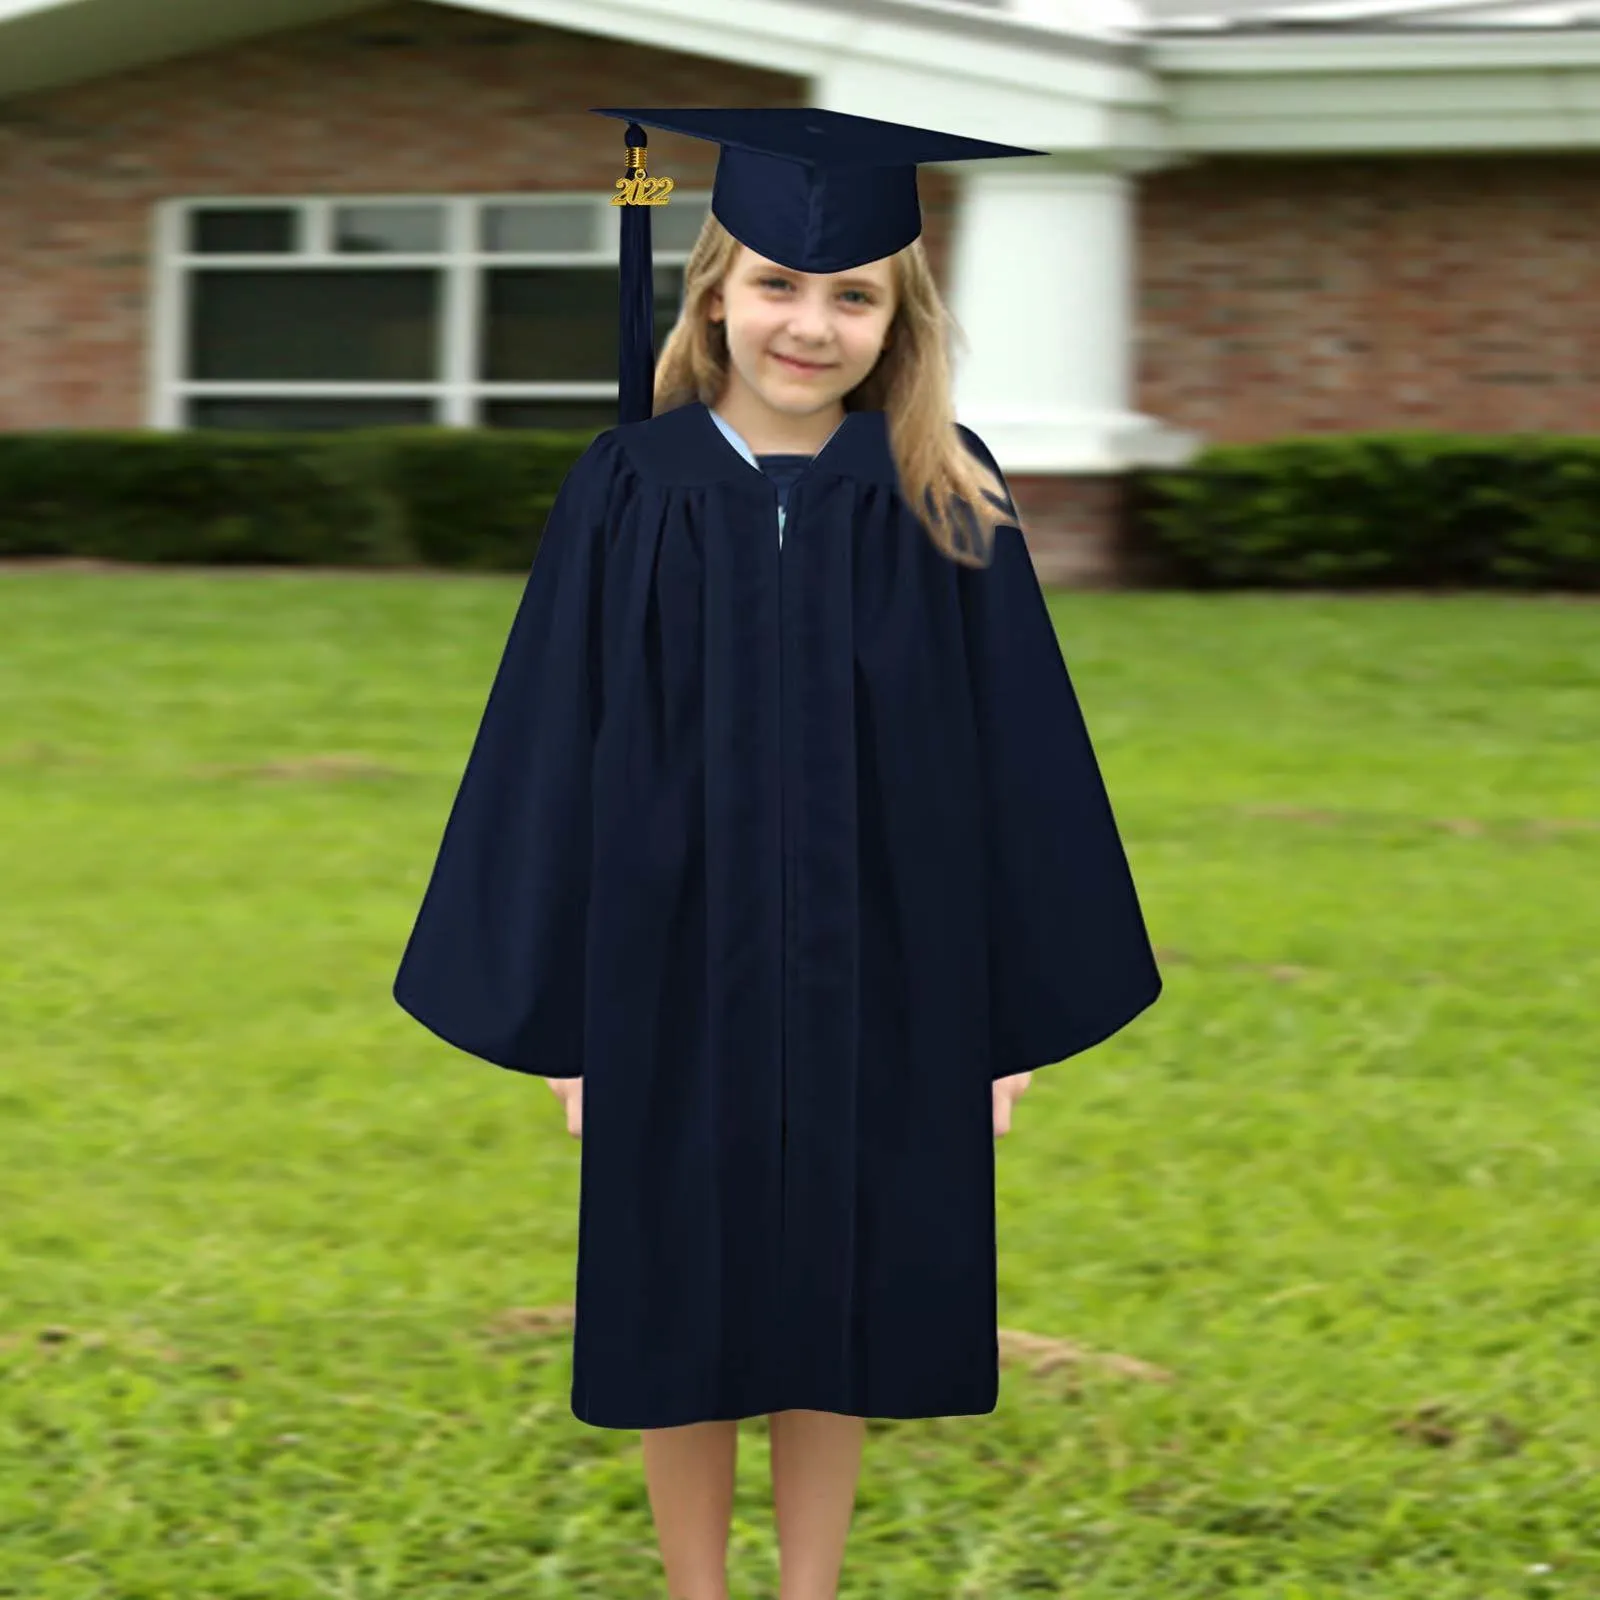 Baby Toddler Graduation Outfit Rentals | Little Grad Rentals